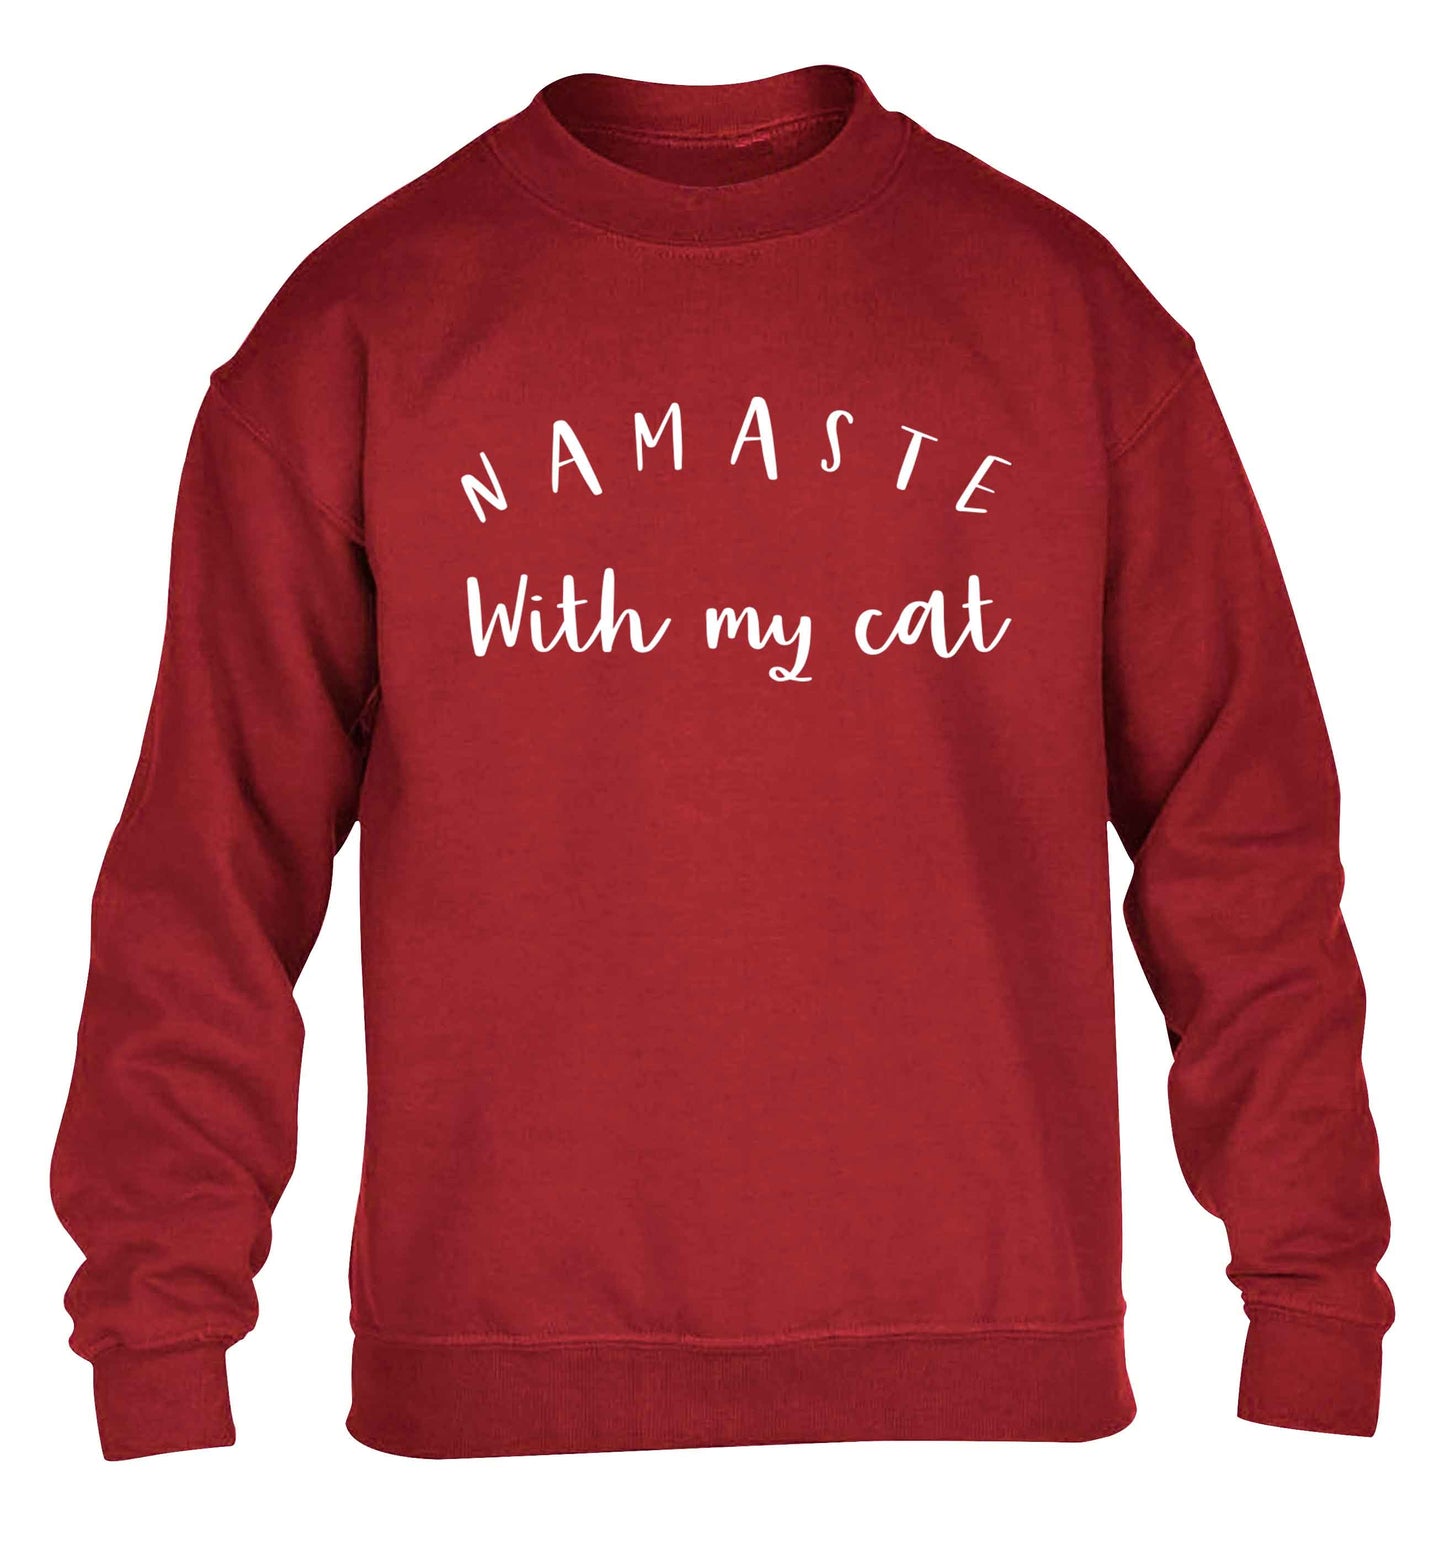 Namaste with my cat children's grey sweater 12-13 Years